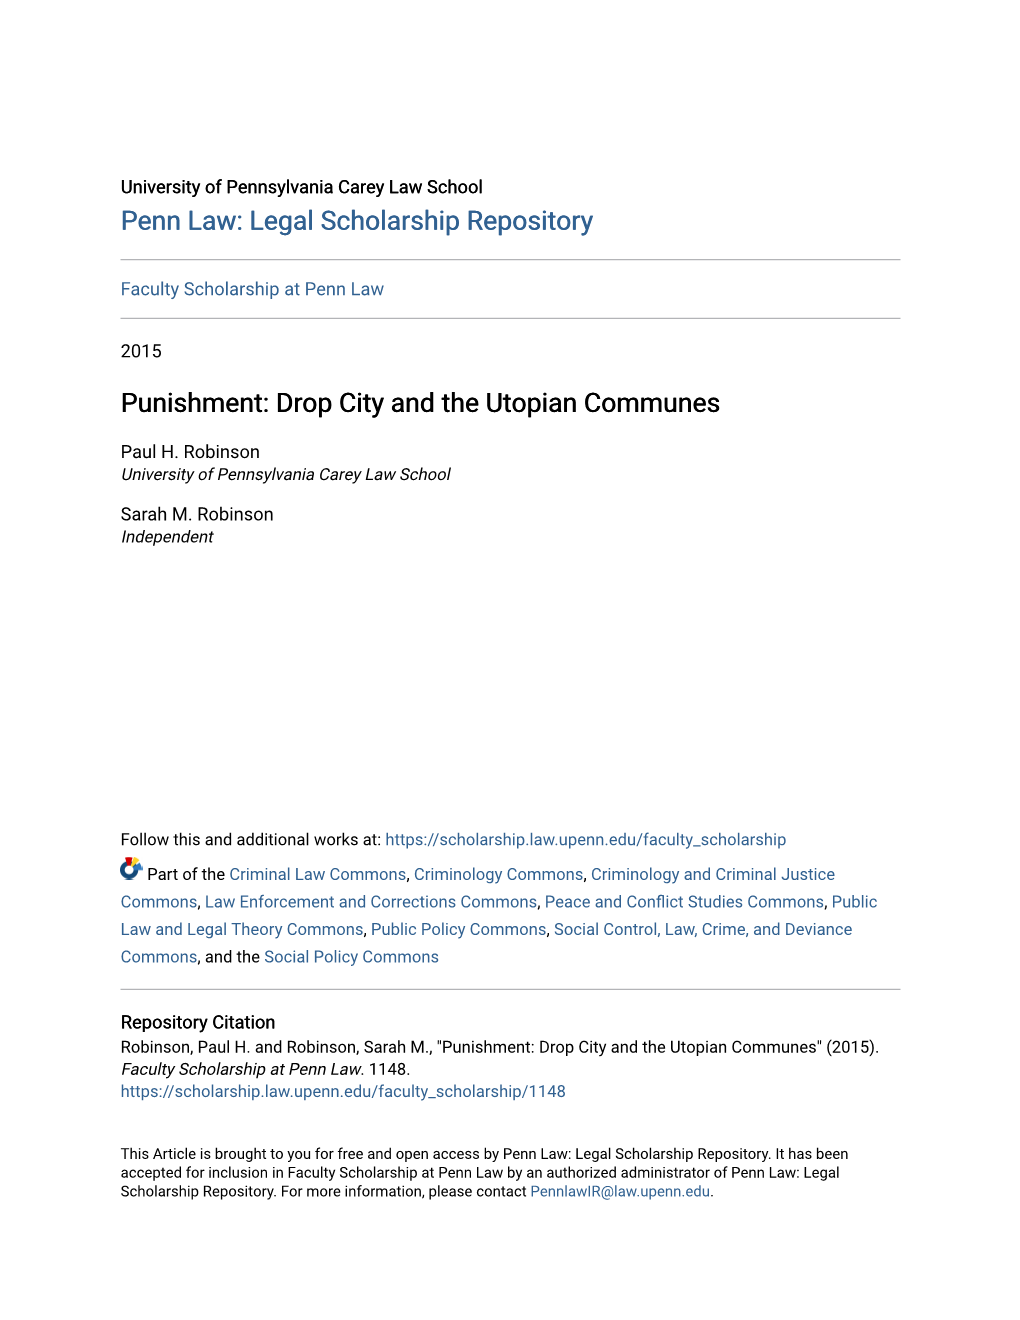 Drop City and the Utopian Communes